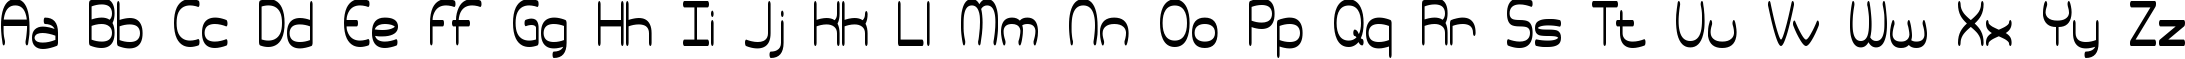 Пример написания английского алфавита шрифтом Pneumatics Tall BRK